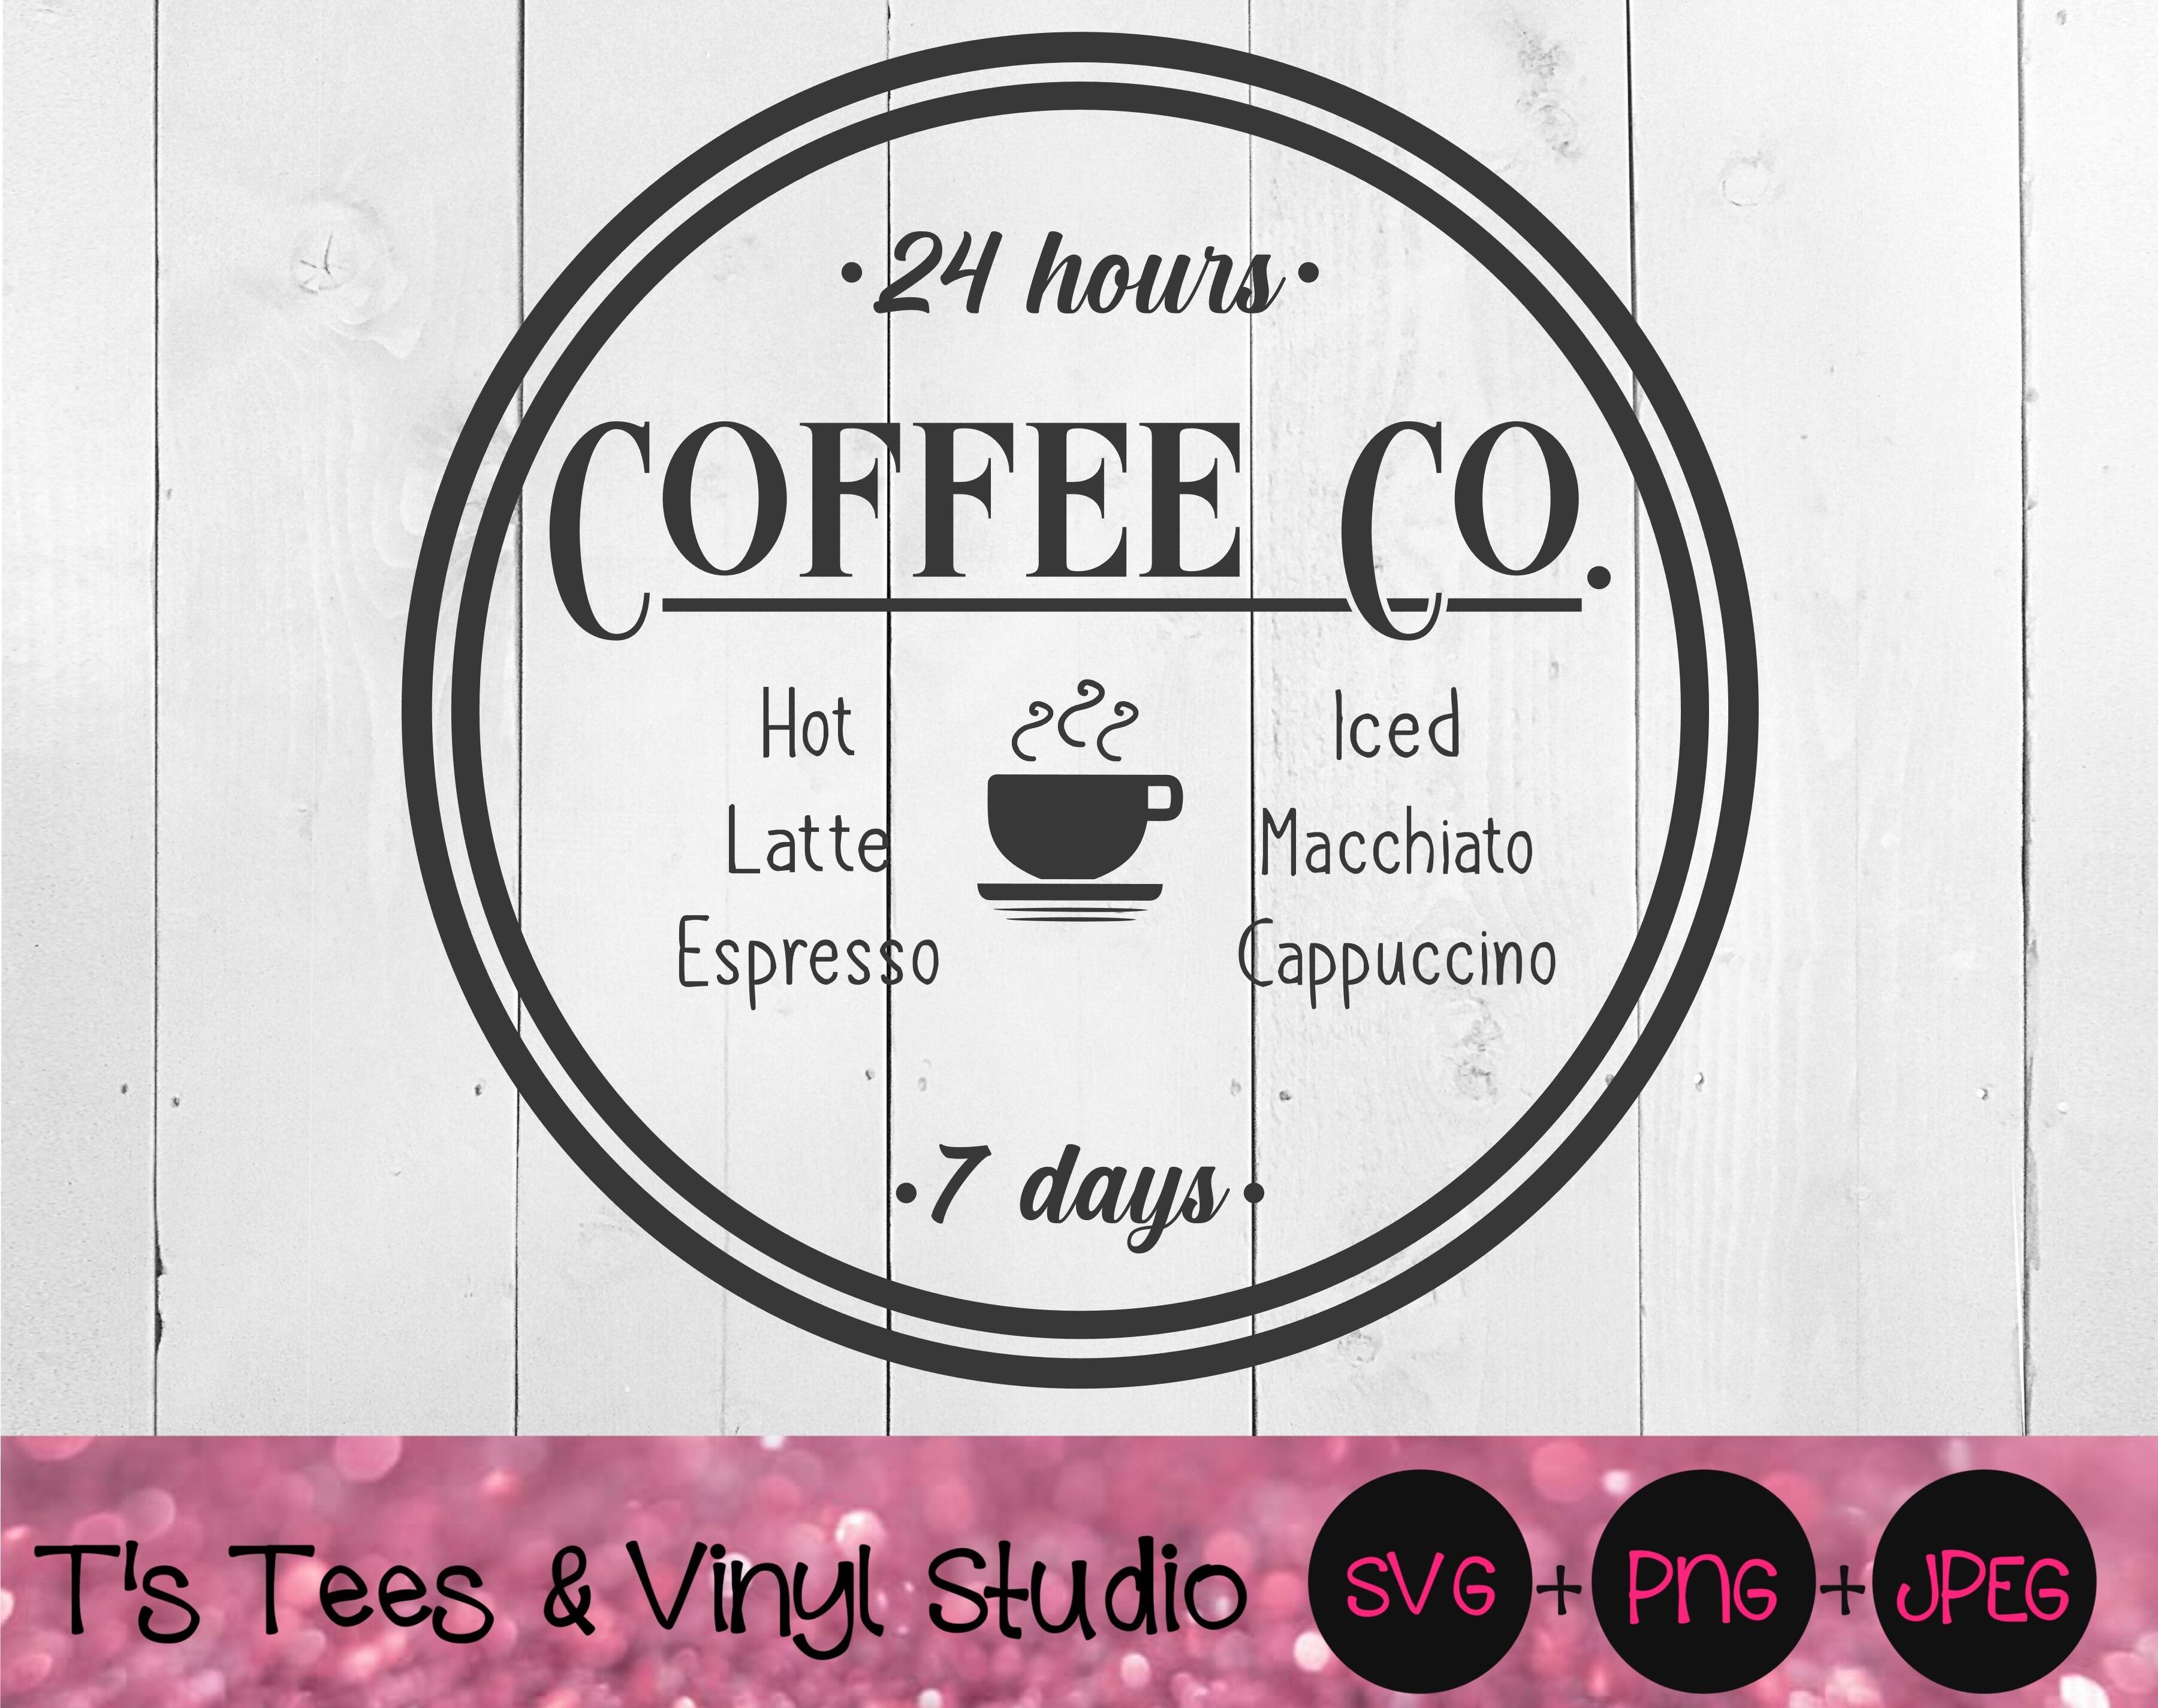 Coffee Company Coffee Co Svg Coffee Sign Latte Iced Coffee Cappuc By T S Tees Vinyl Studio Thehungryjpeg Com